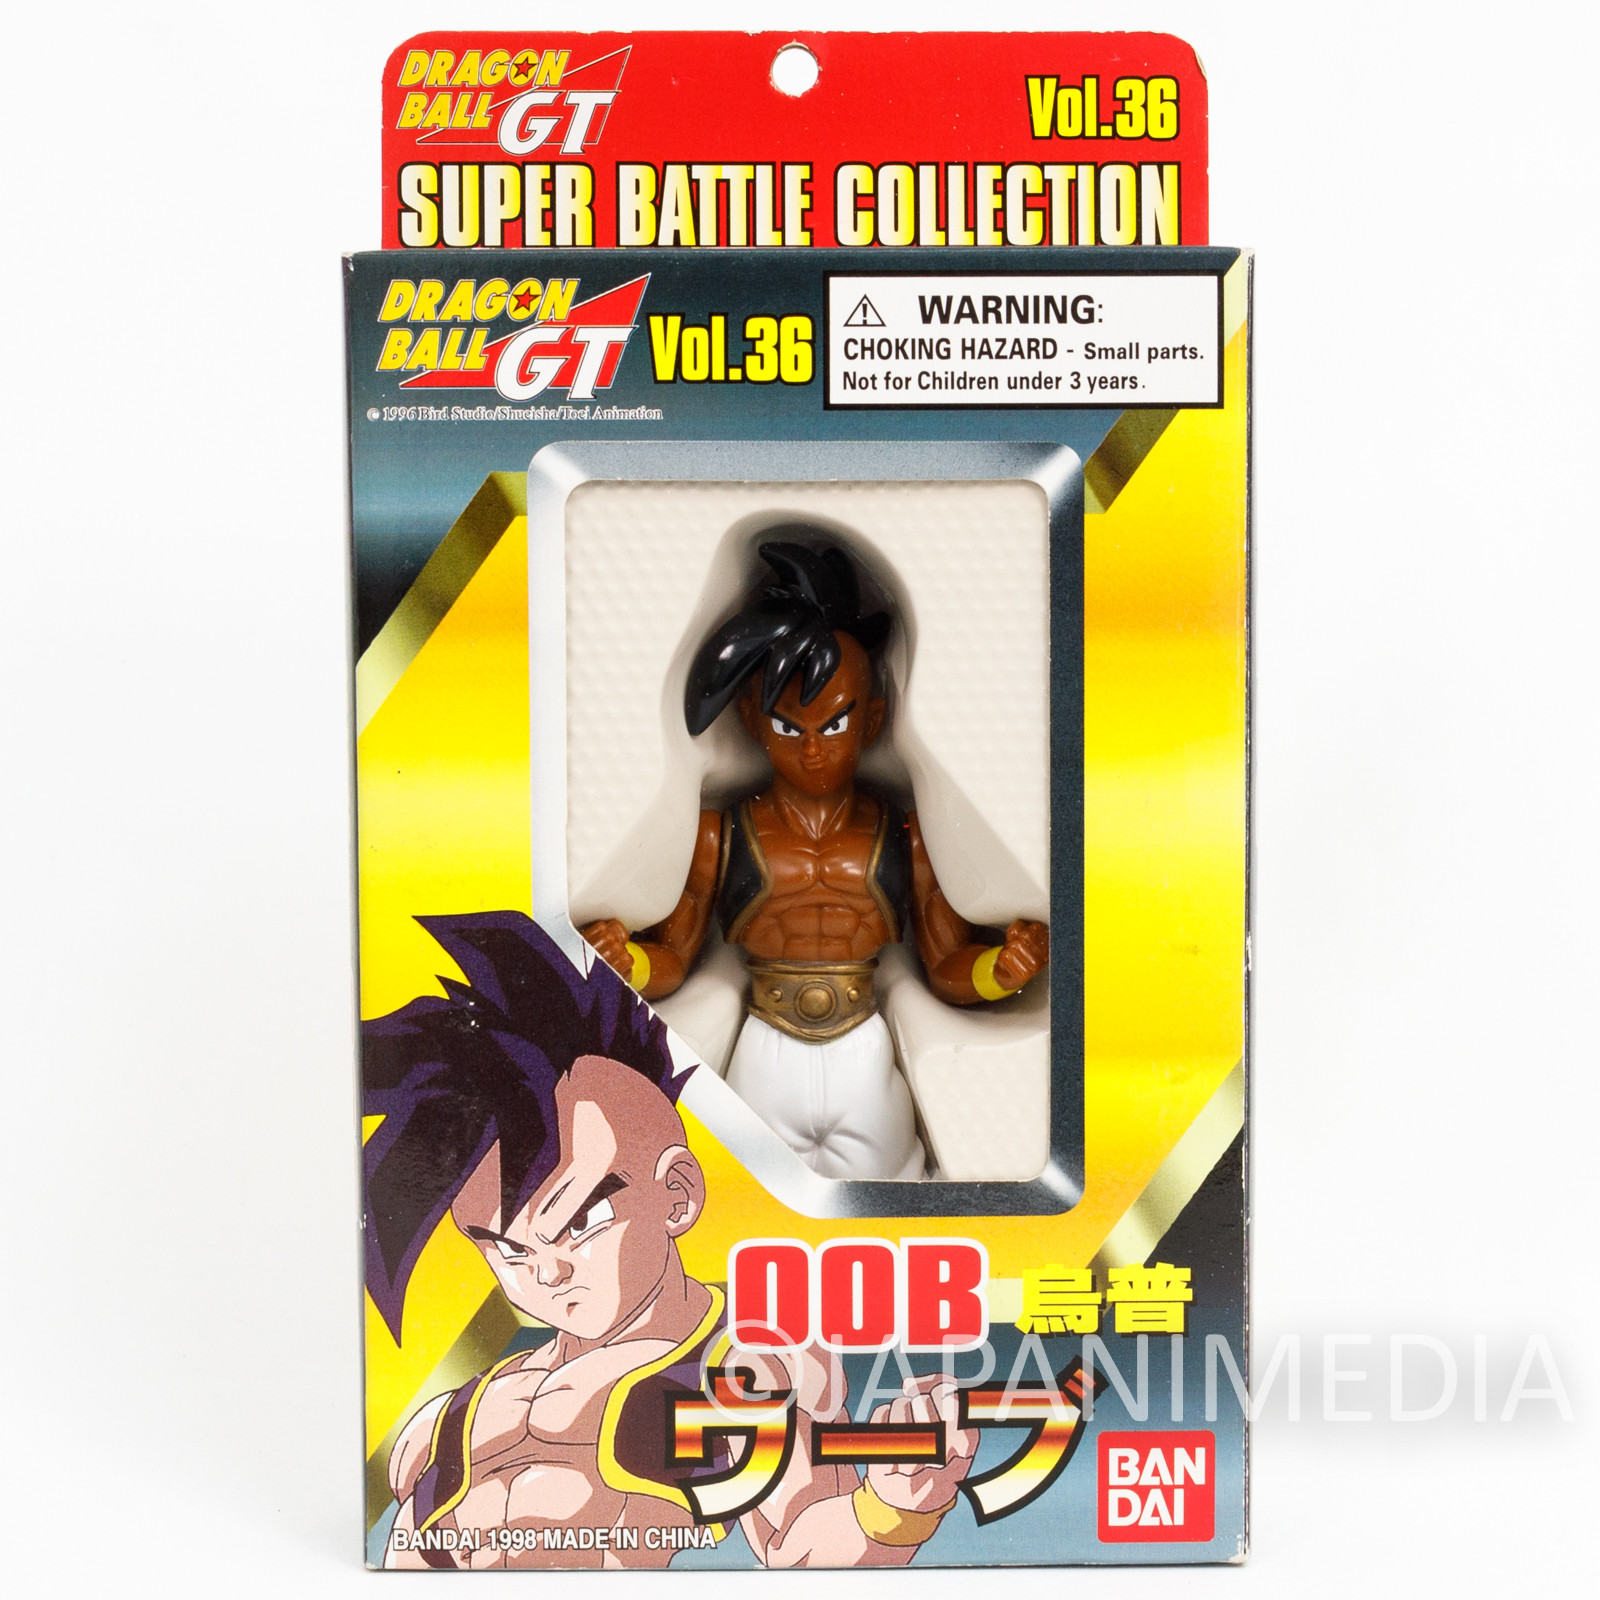 Dragon ball GT - Edition Oob - Bandai Real Works action figure